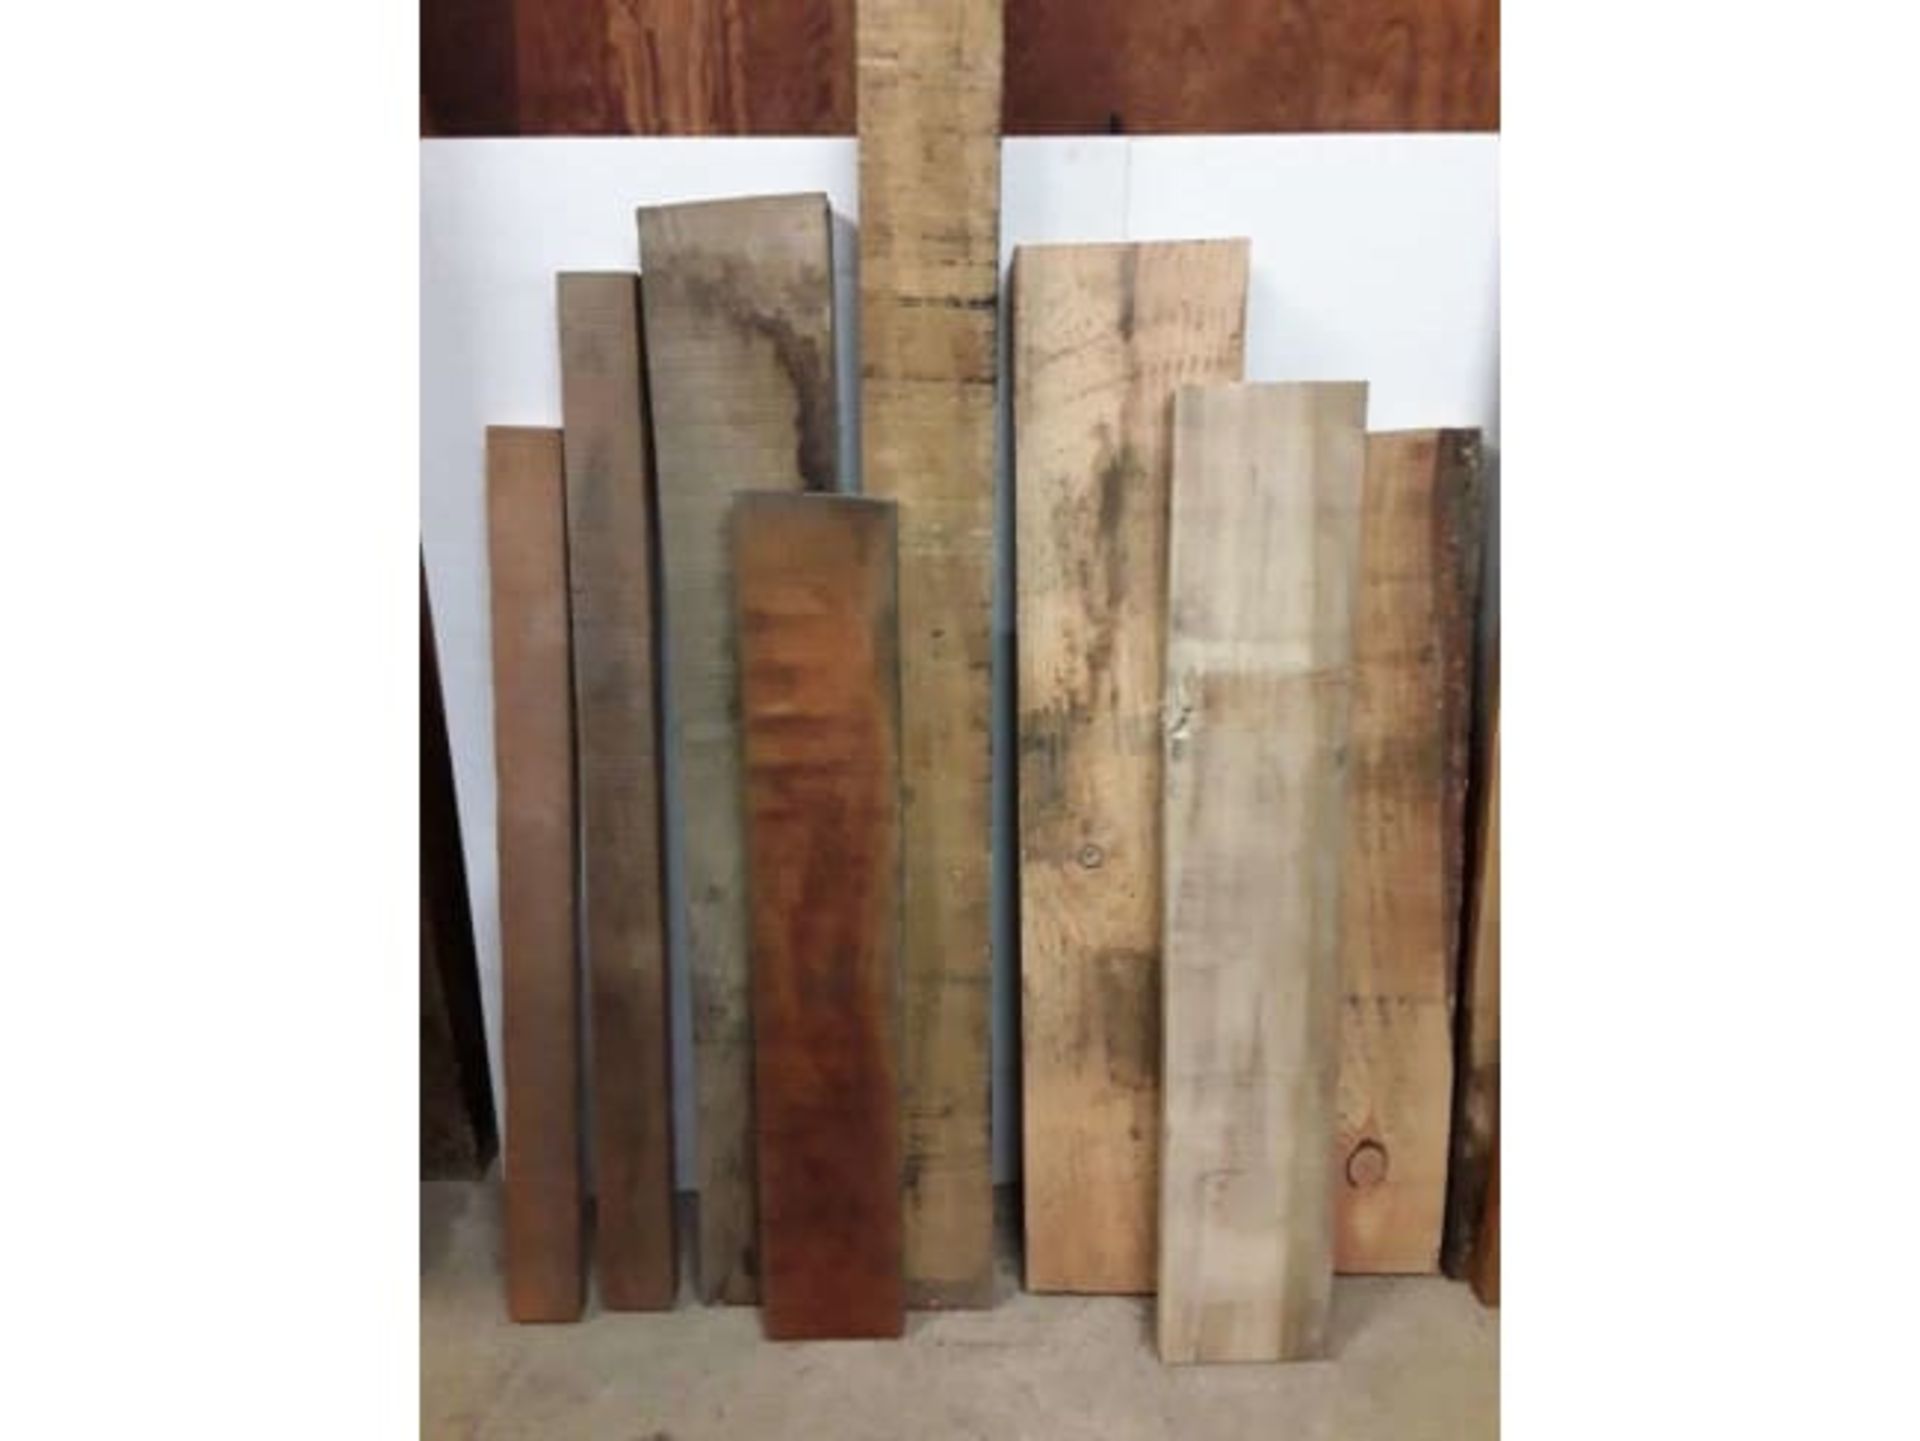 23x Hardwood / Softwood Mixed Timber Boards / Offcuts, Opepe, Chestnut, Idigbo, Tulip, Ekki - Image 2 of 5